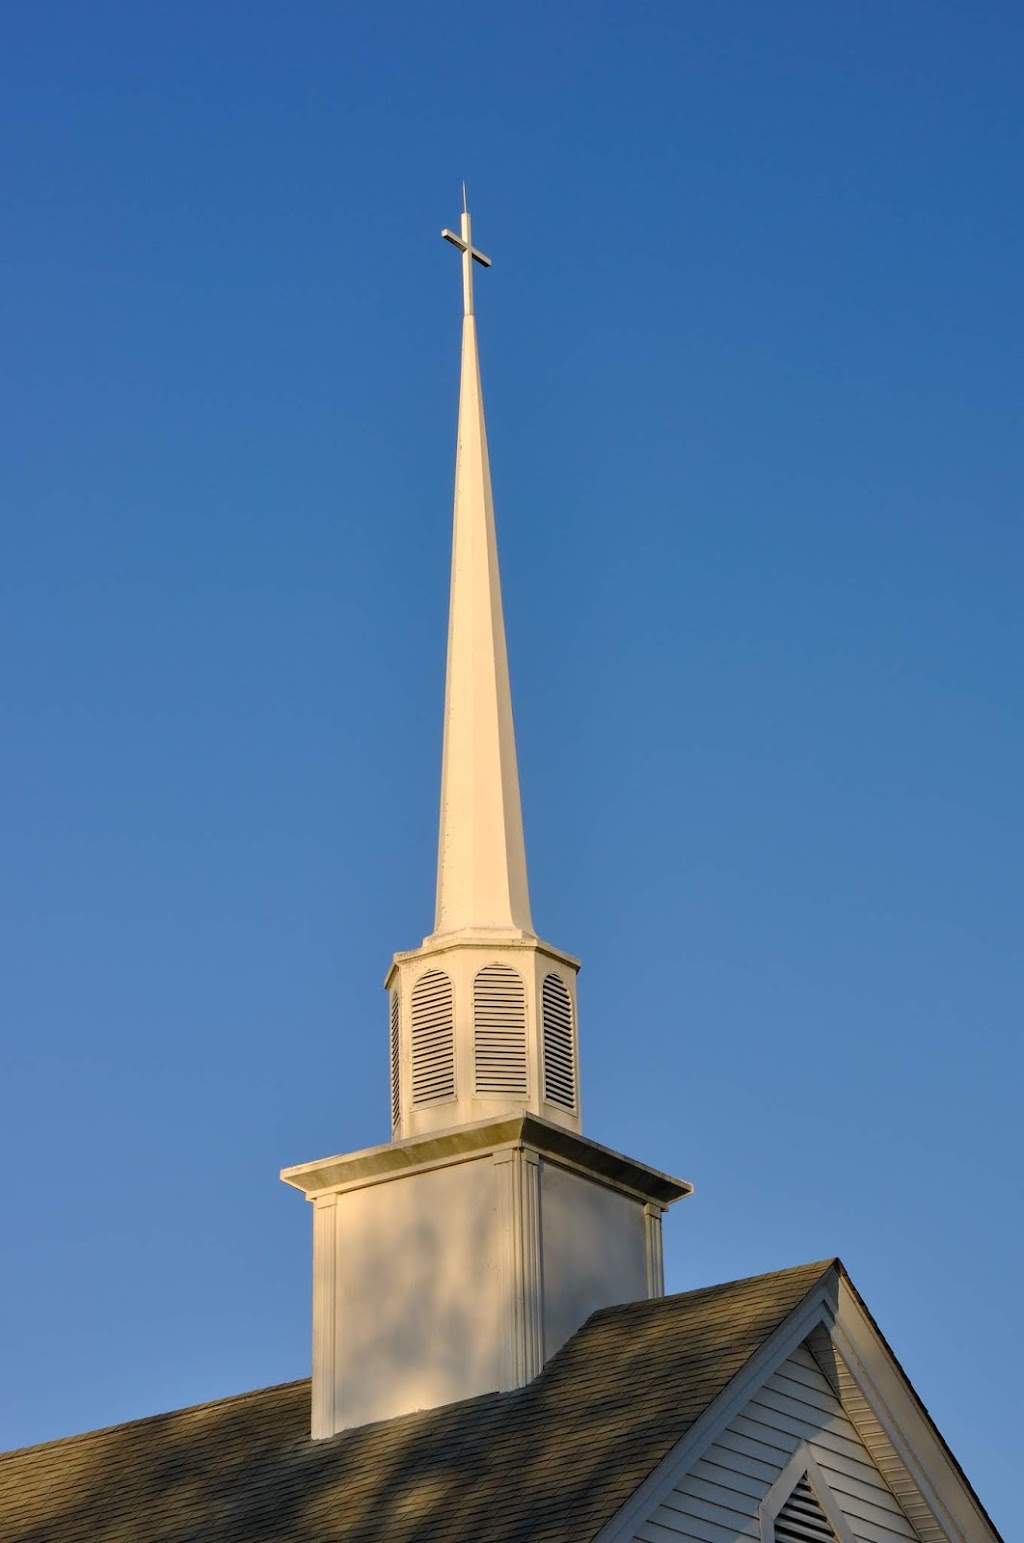 Mt Pleasant Baptist Church | 19300 The Glebe Ln, Charles City, VA 23030, USA | Phone: (804) 829-5015